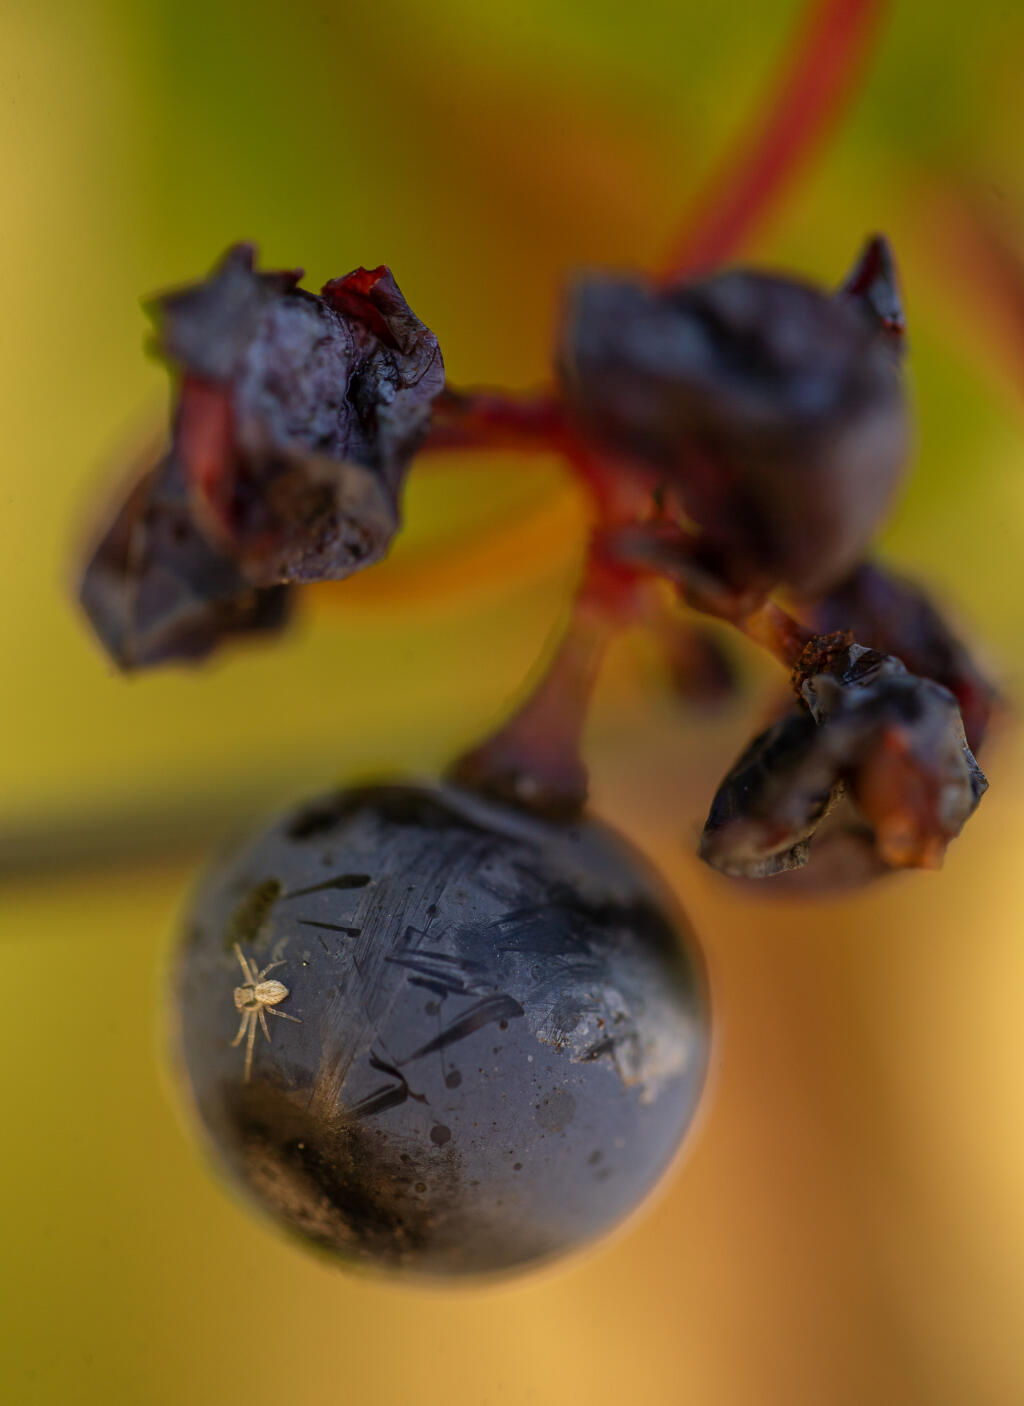 A spider finds an unpicked grape in the historic Cohn Vineyard near Healdsburg. (Chad Surmick / The Press Democrat file)